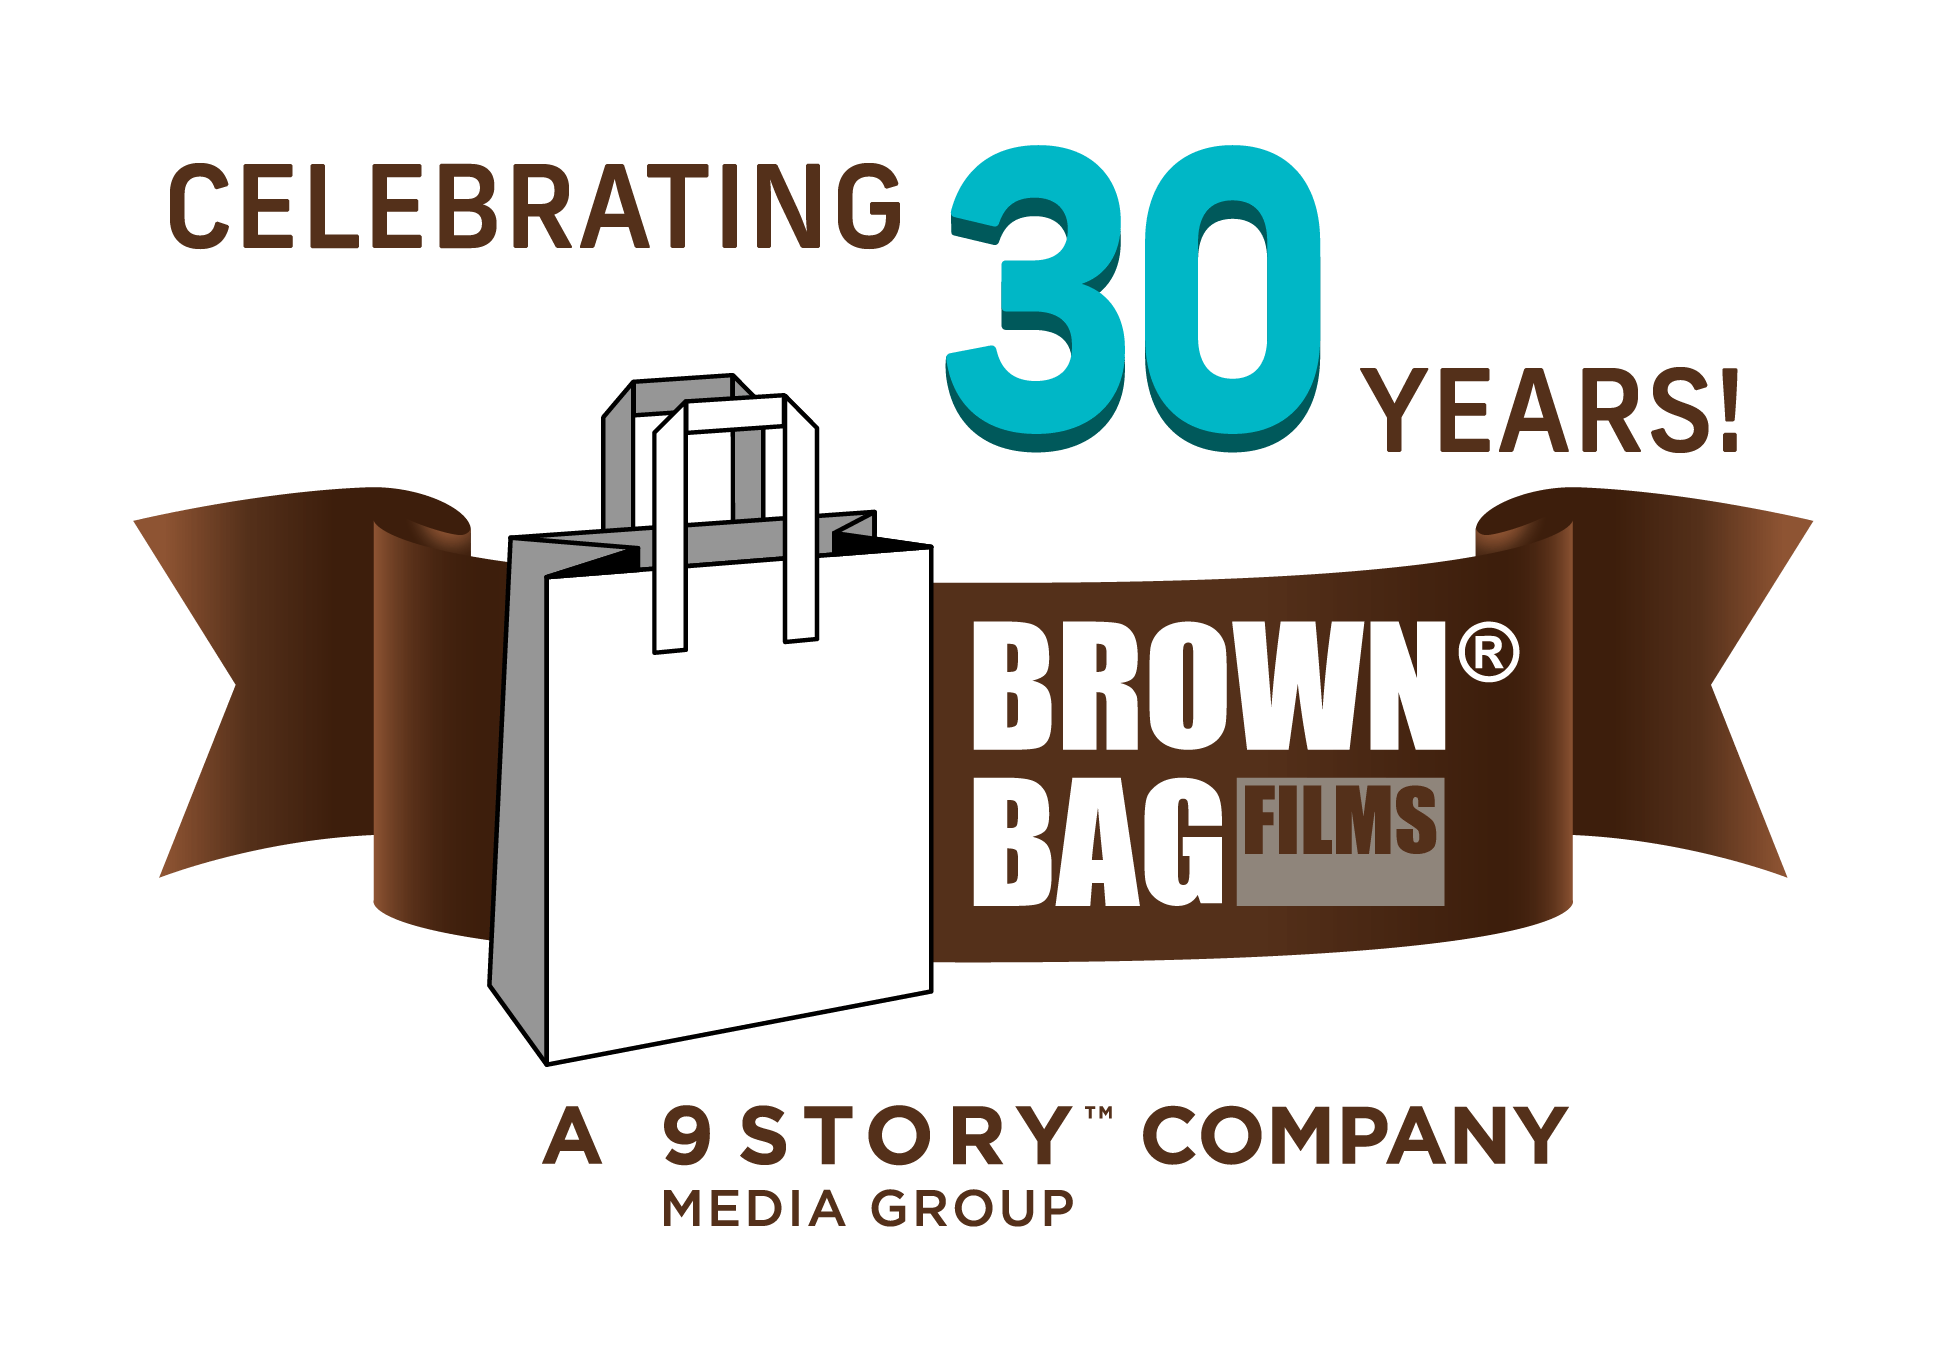 Brown Bag Films